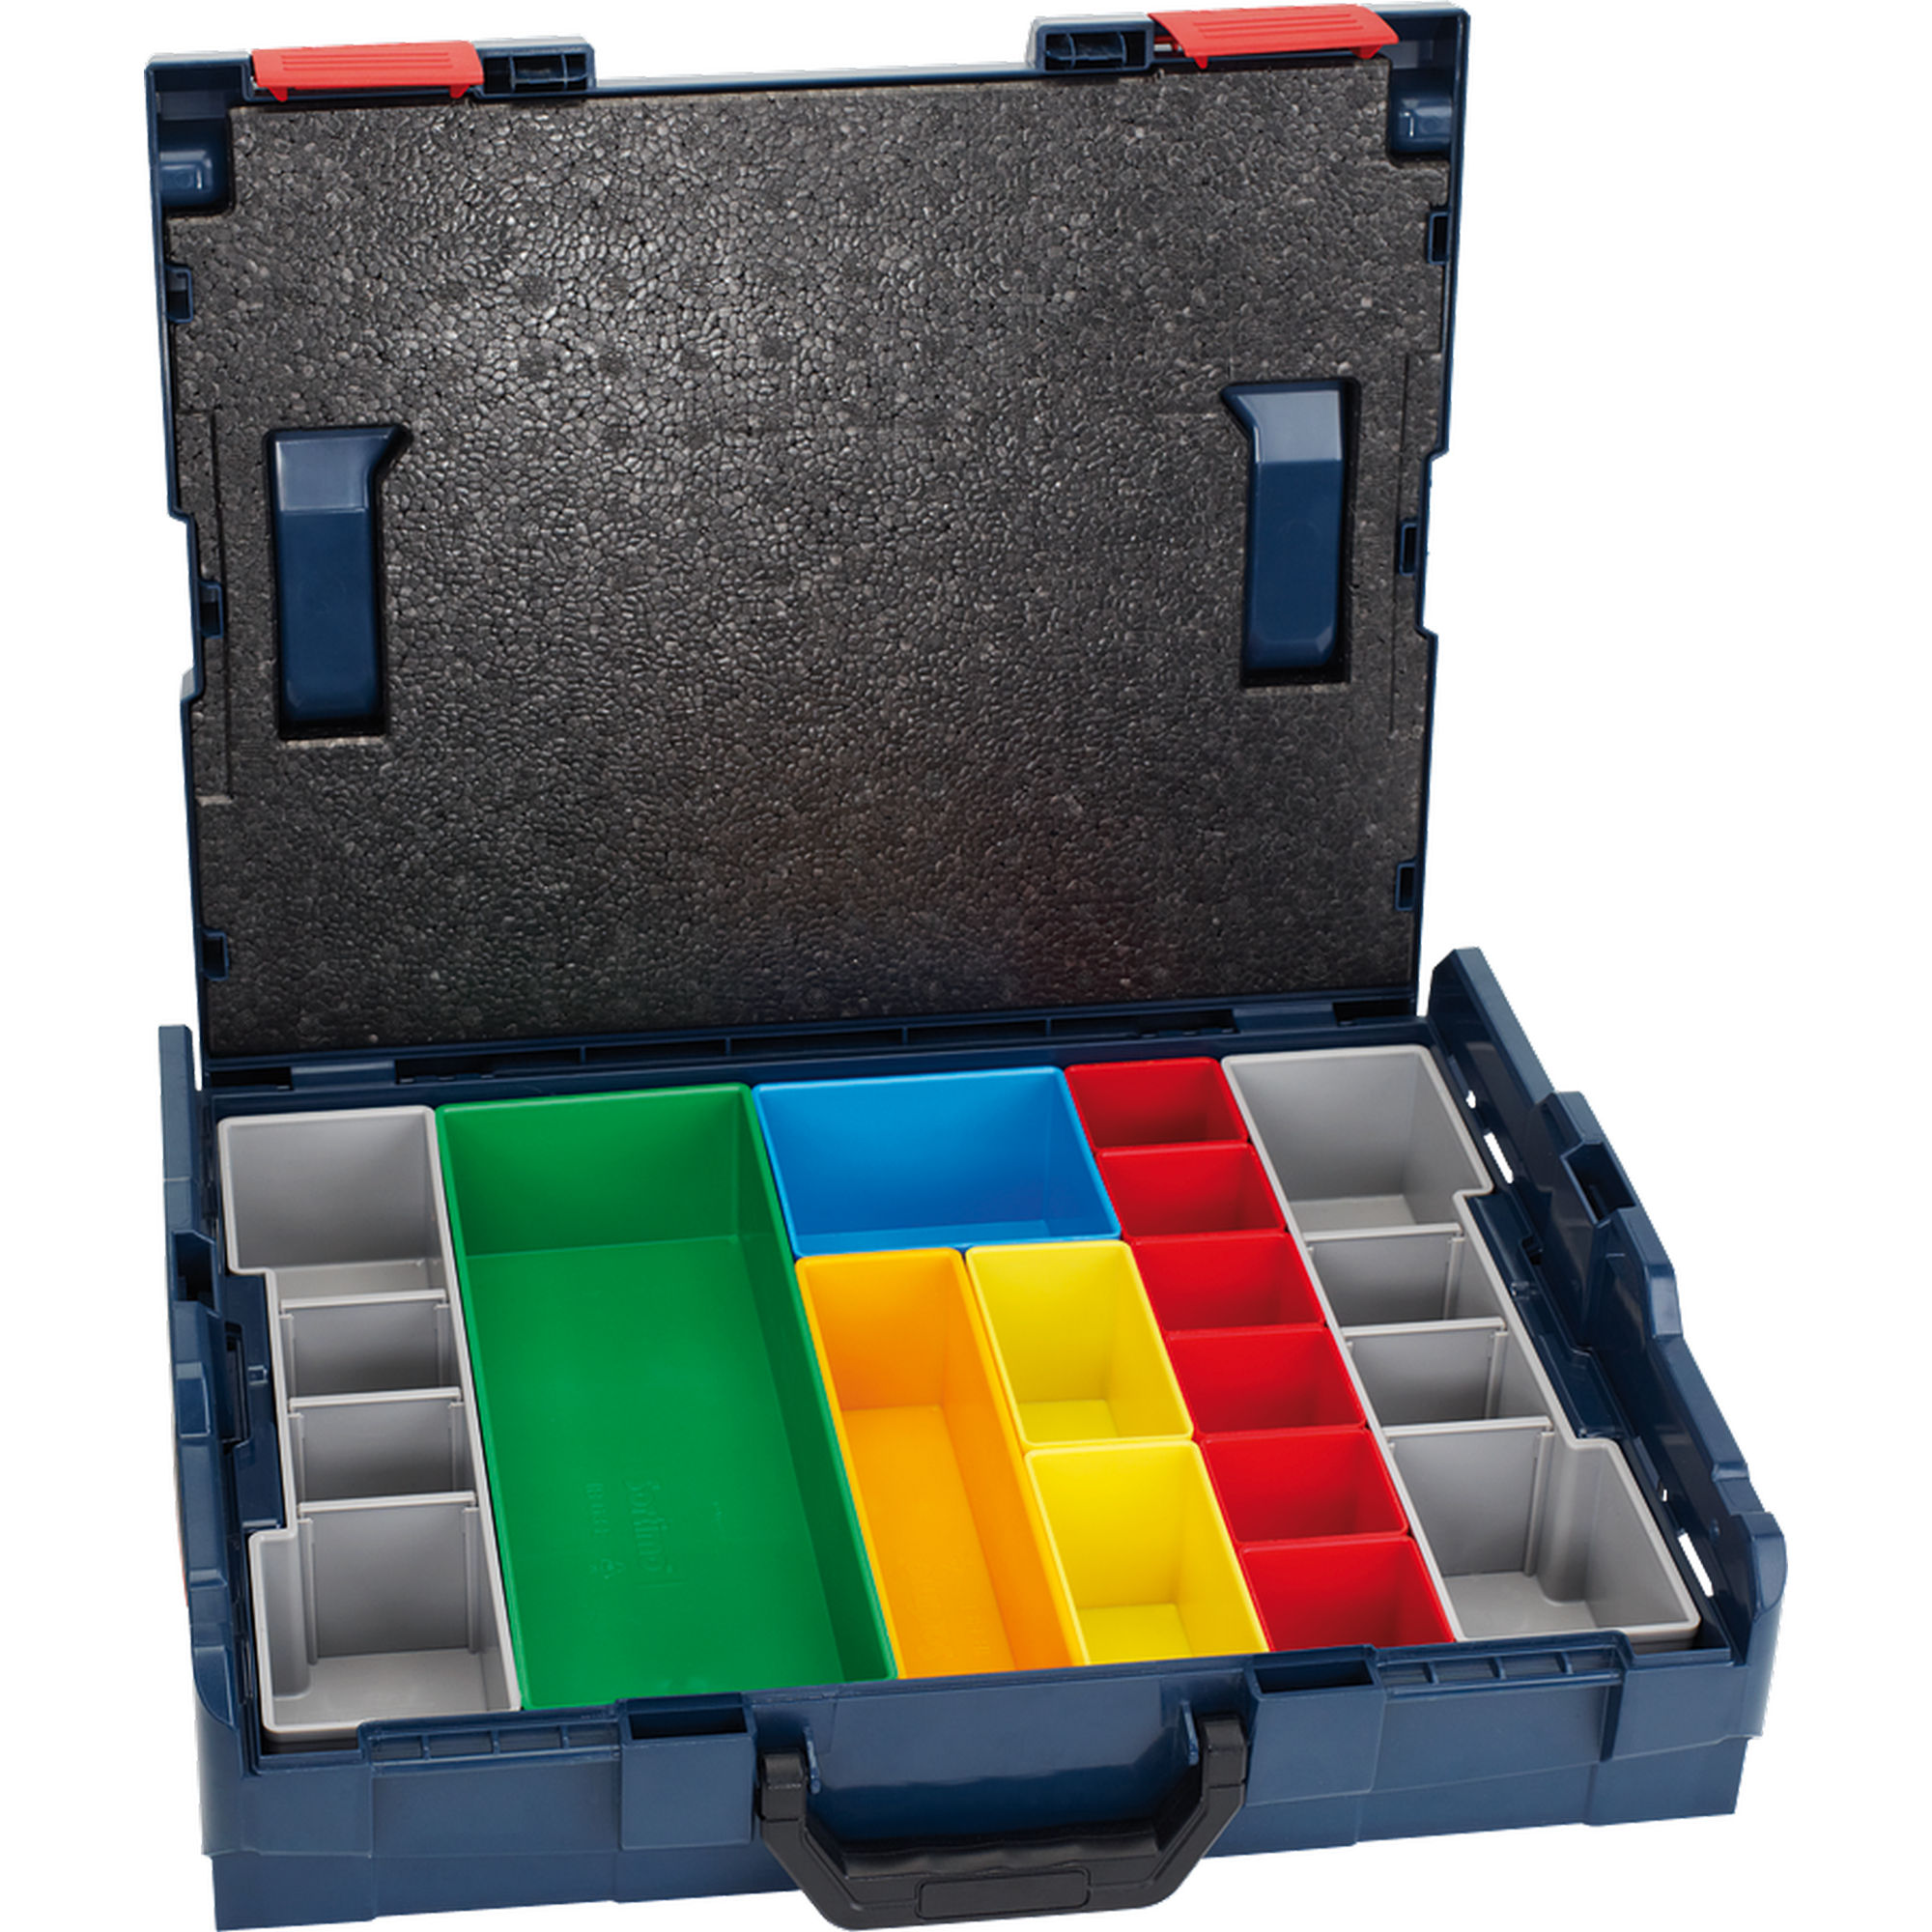 Werkzeugkoffer-Set 'L-BOXX 102 Professional' 13-teilig + product picture